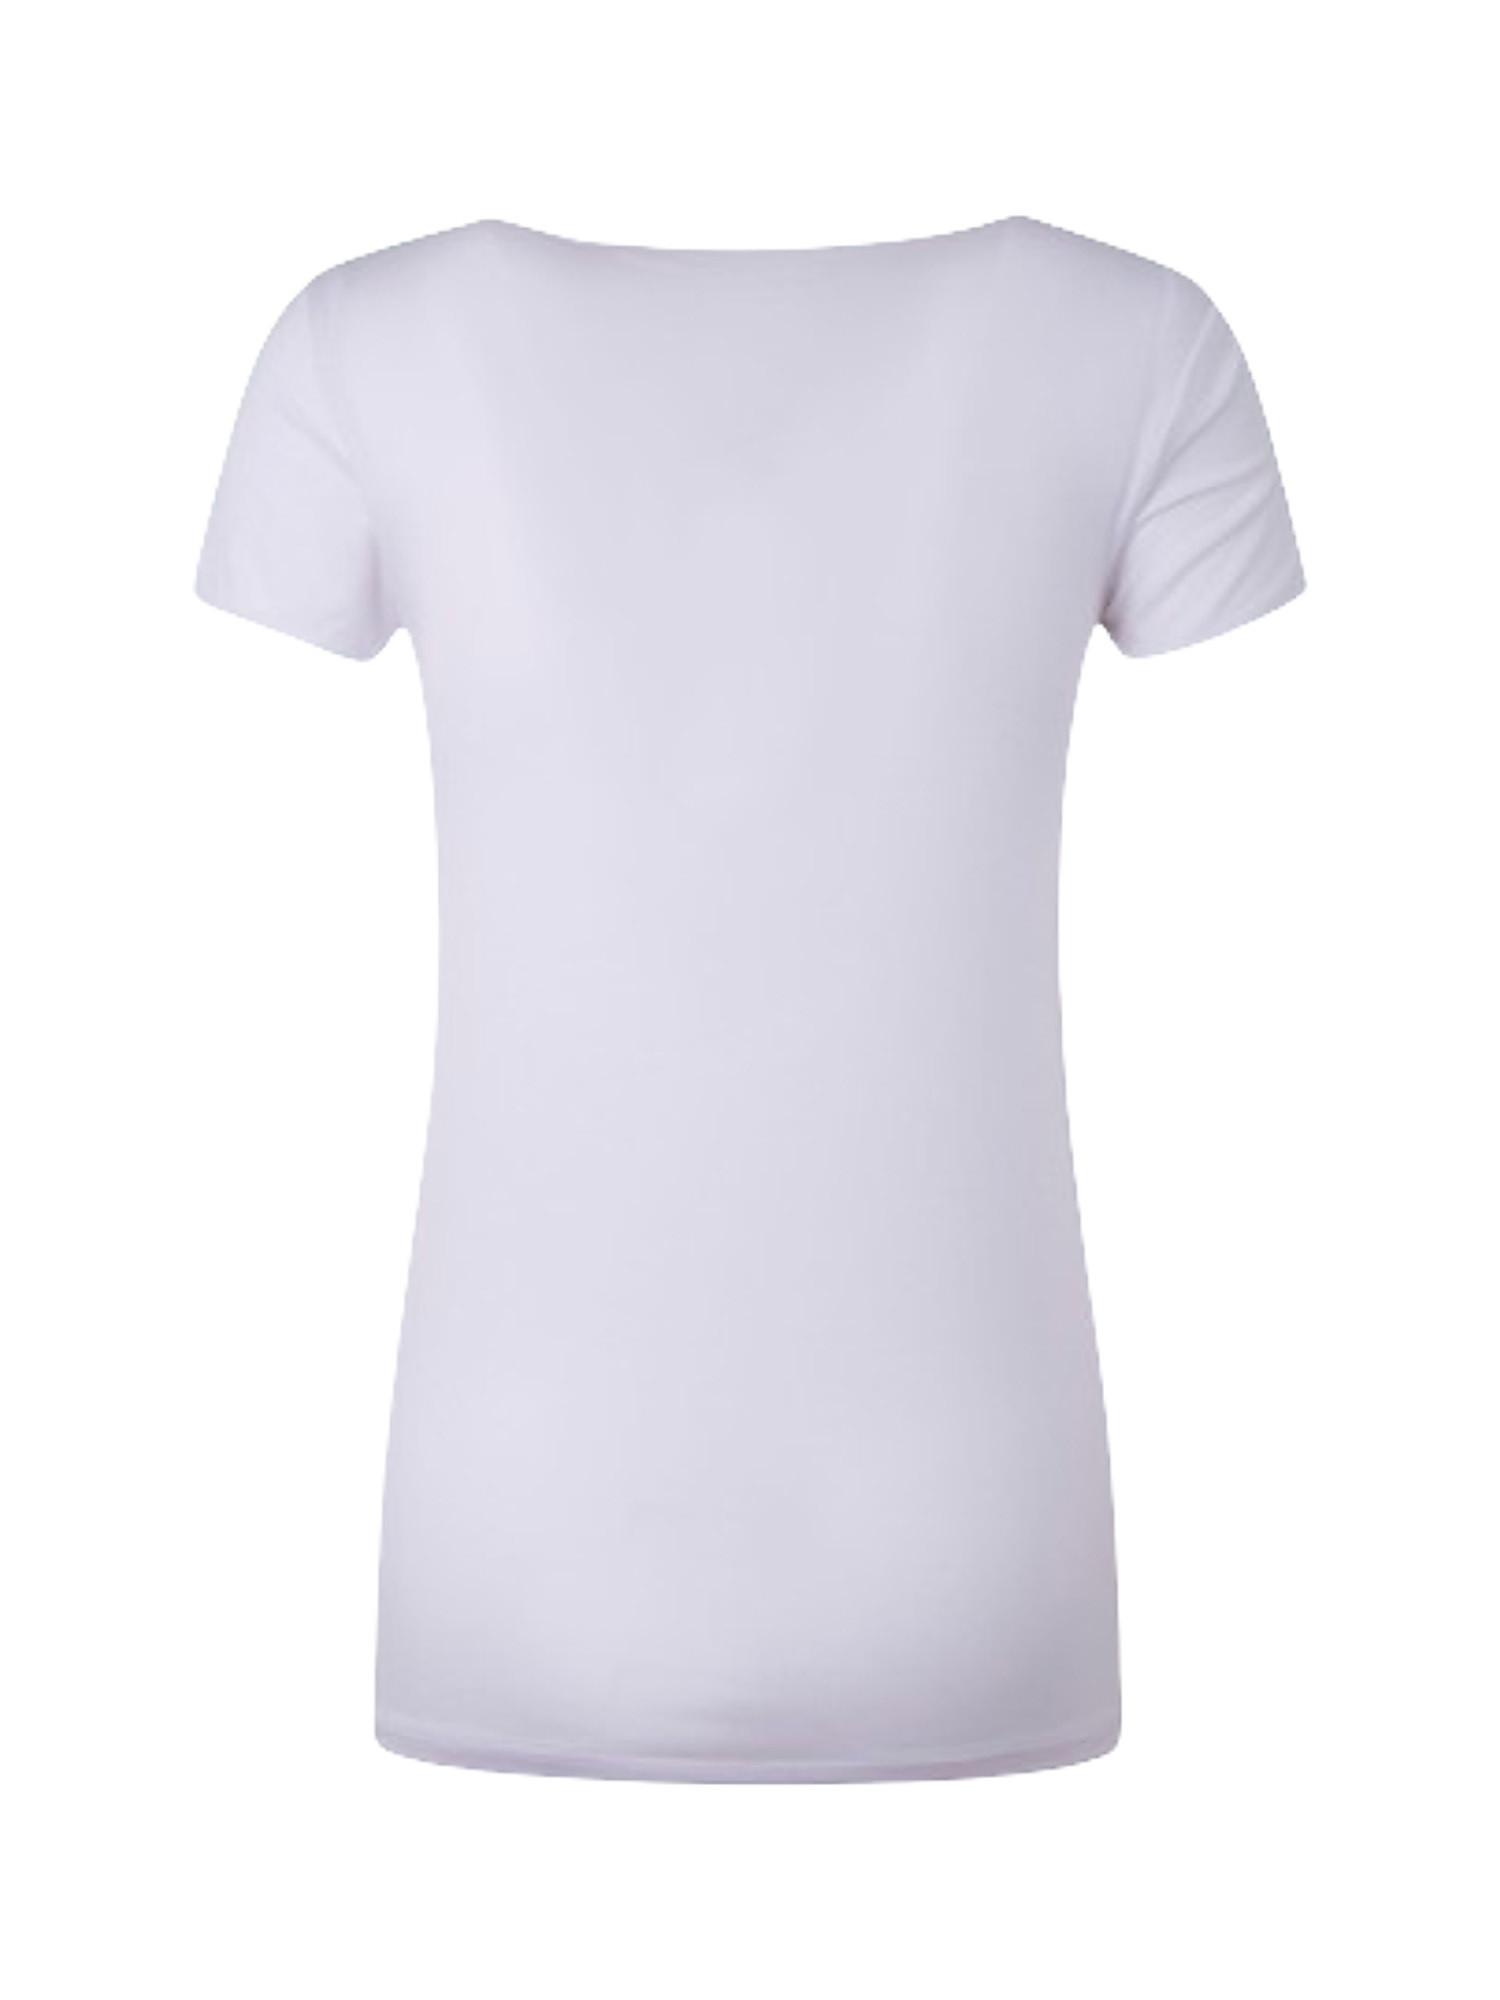 T-shirt con logo 'portobello' cameron, Bianco, large image number 1